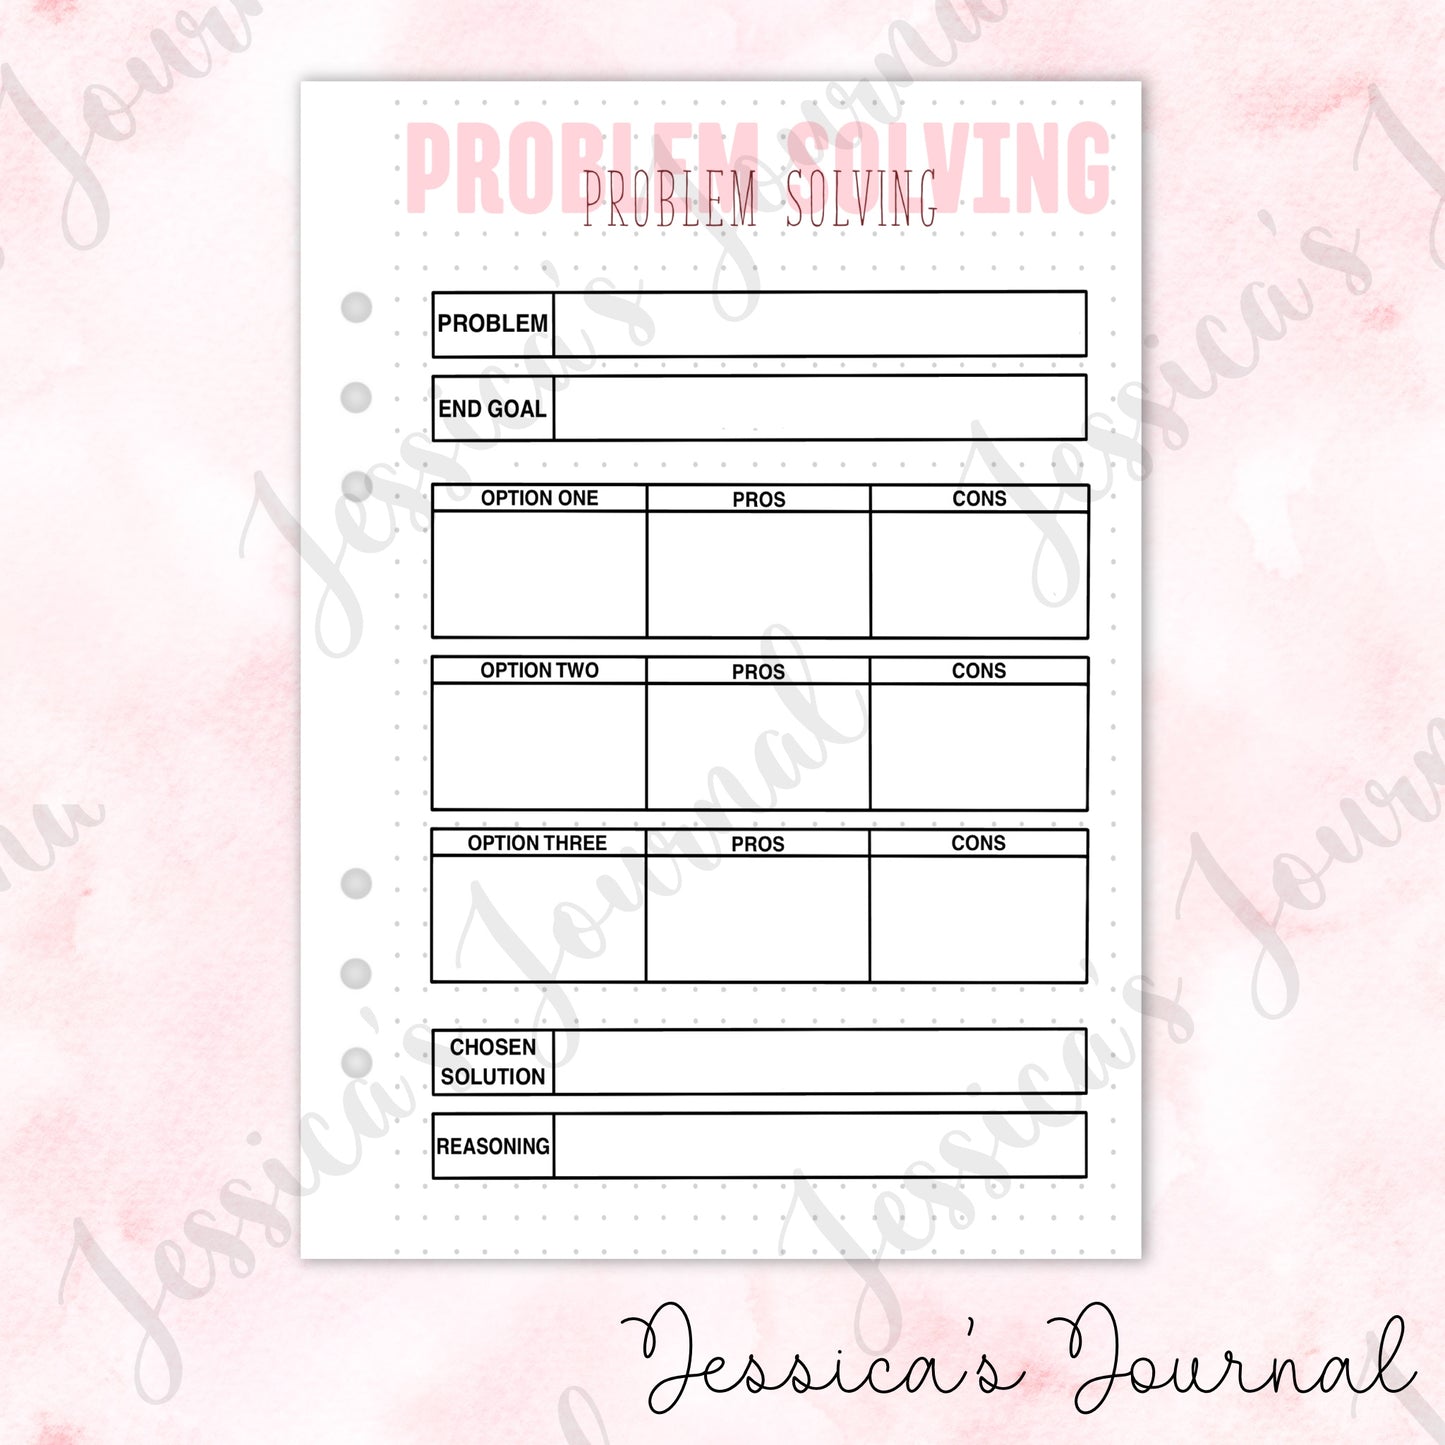 Problem Solving | Journal Spread